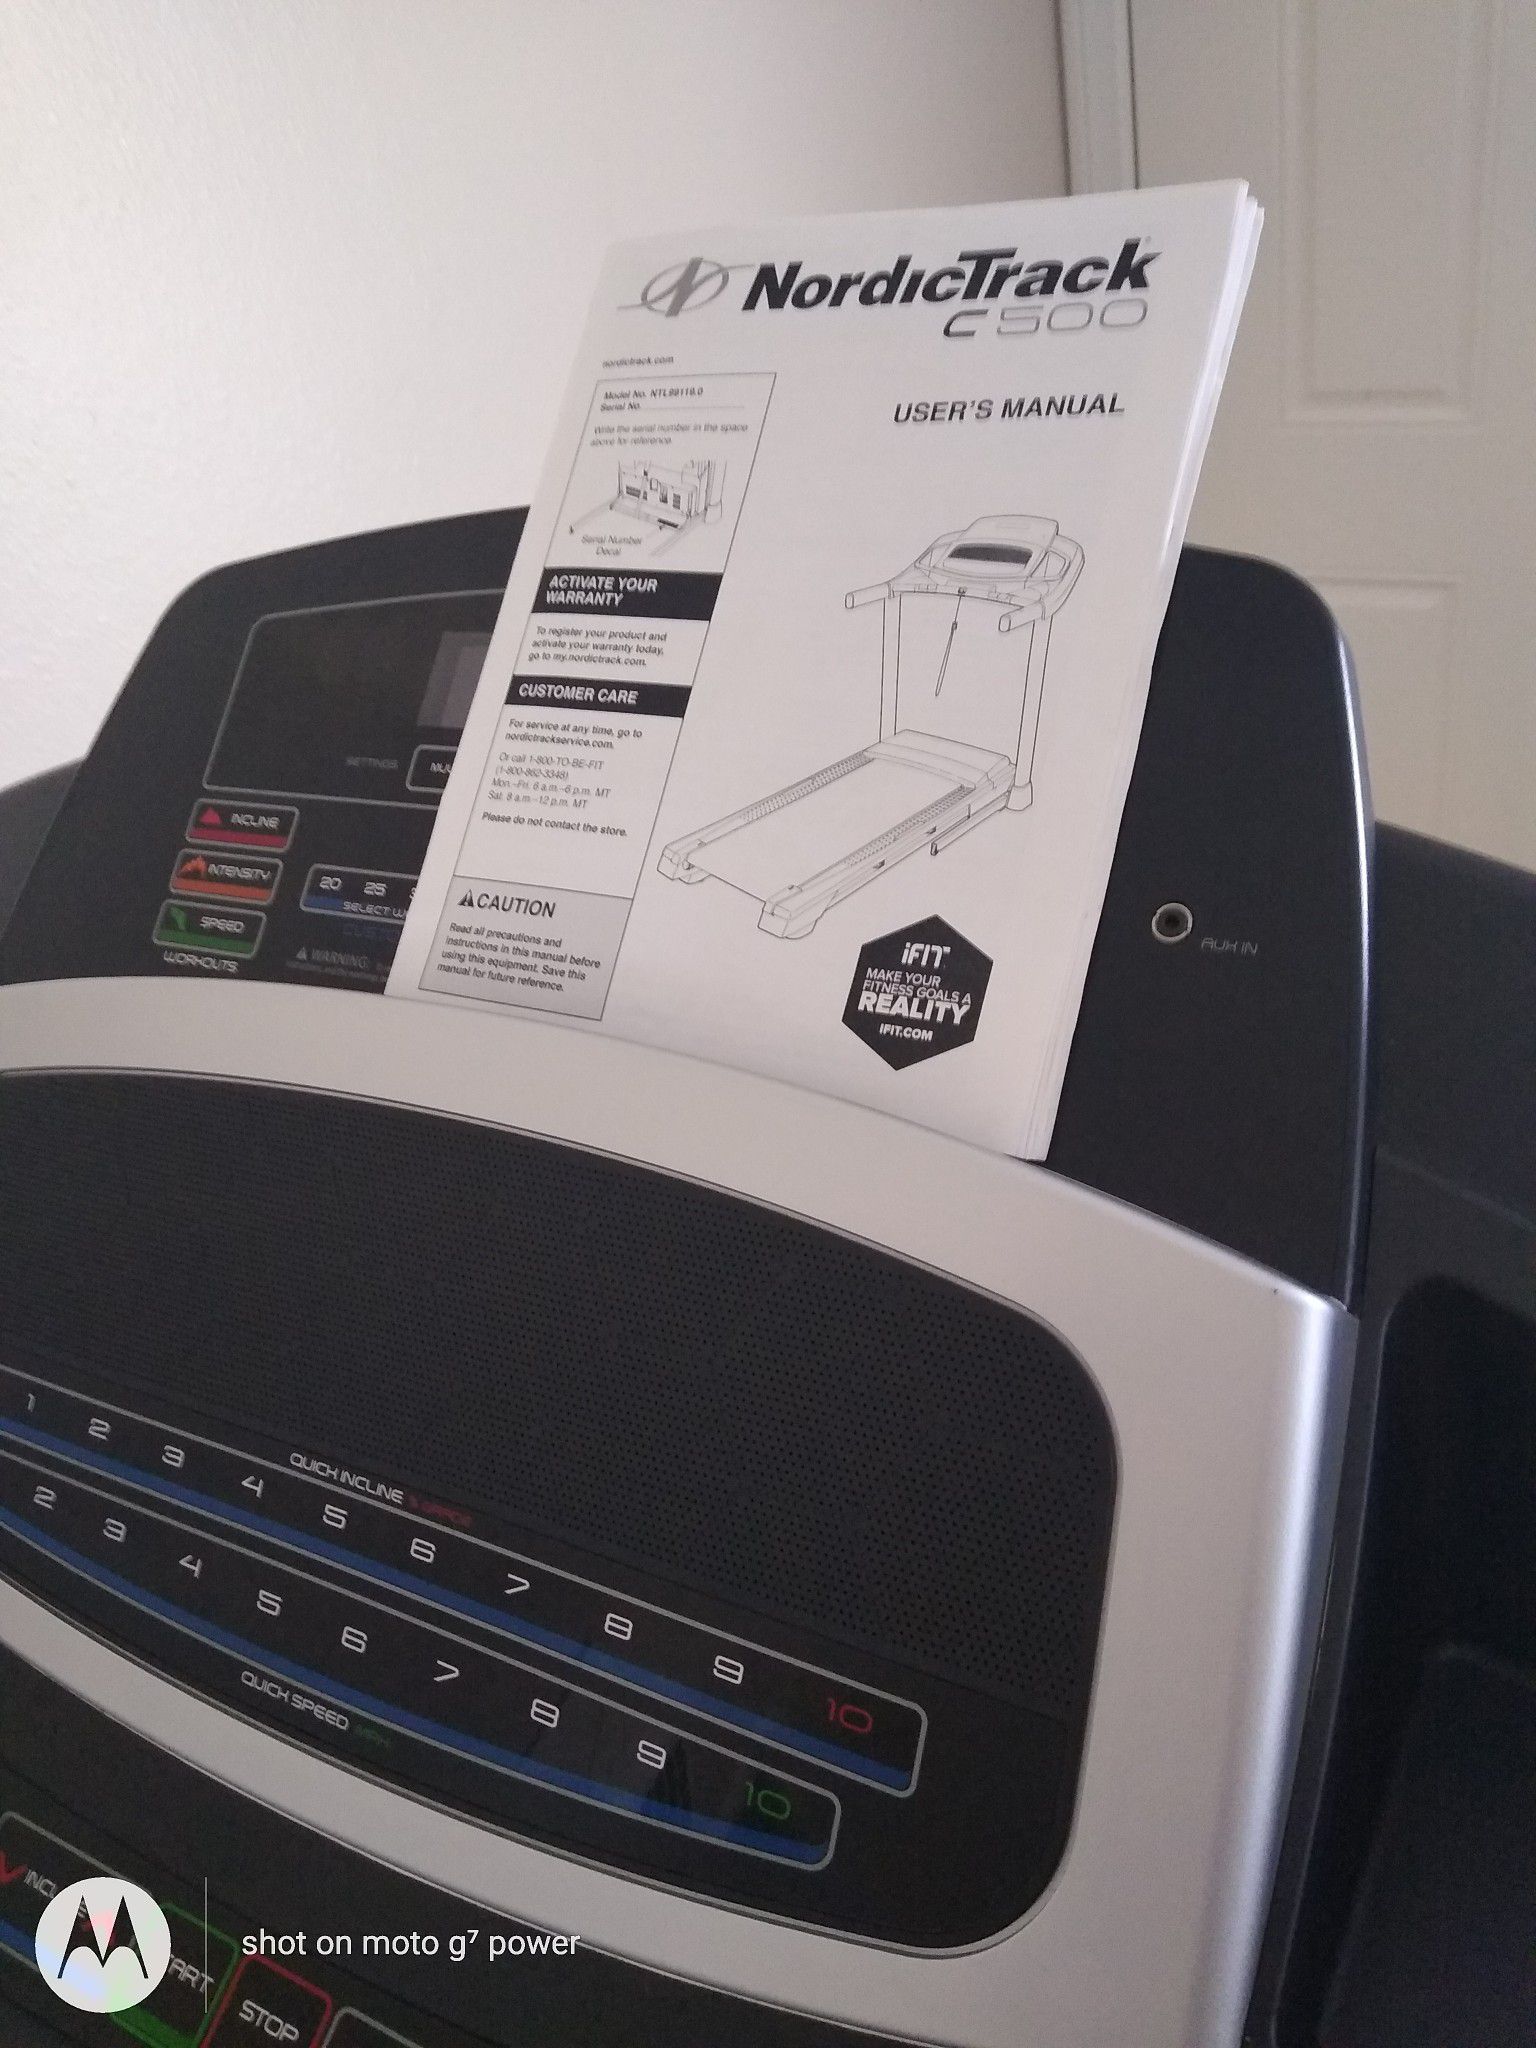 NEW, NordicTrack C500 treadmill